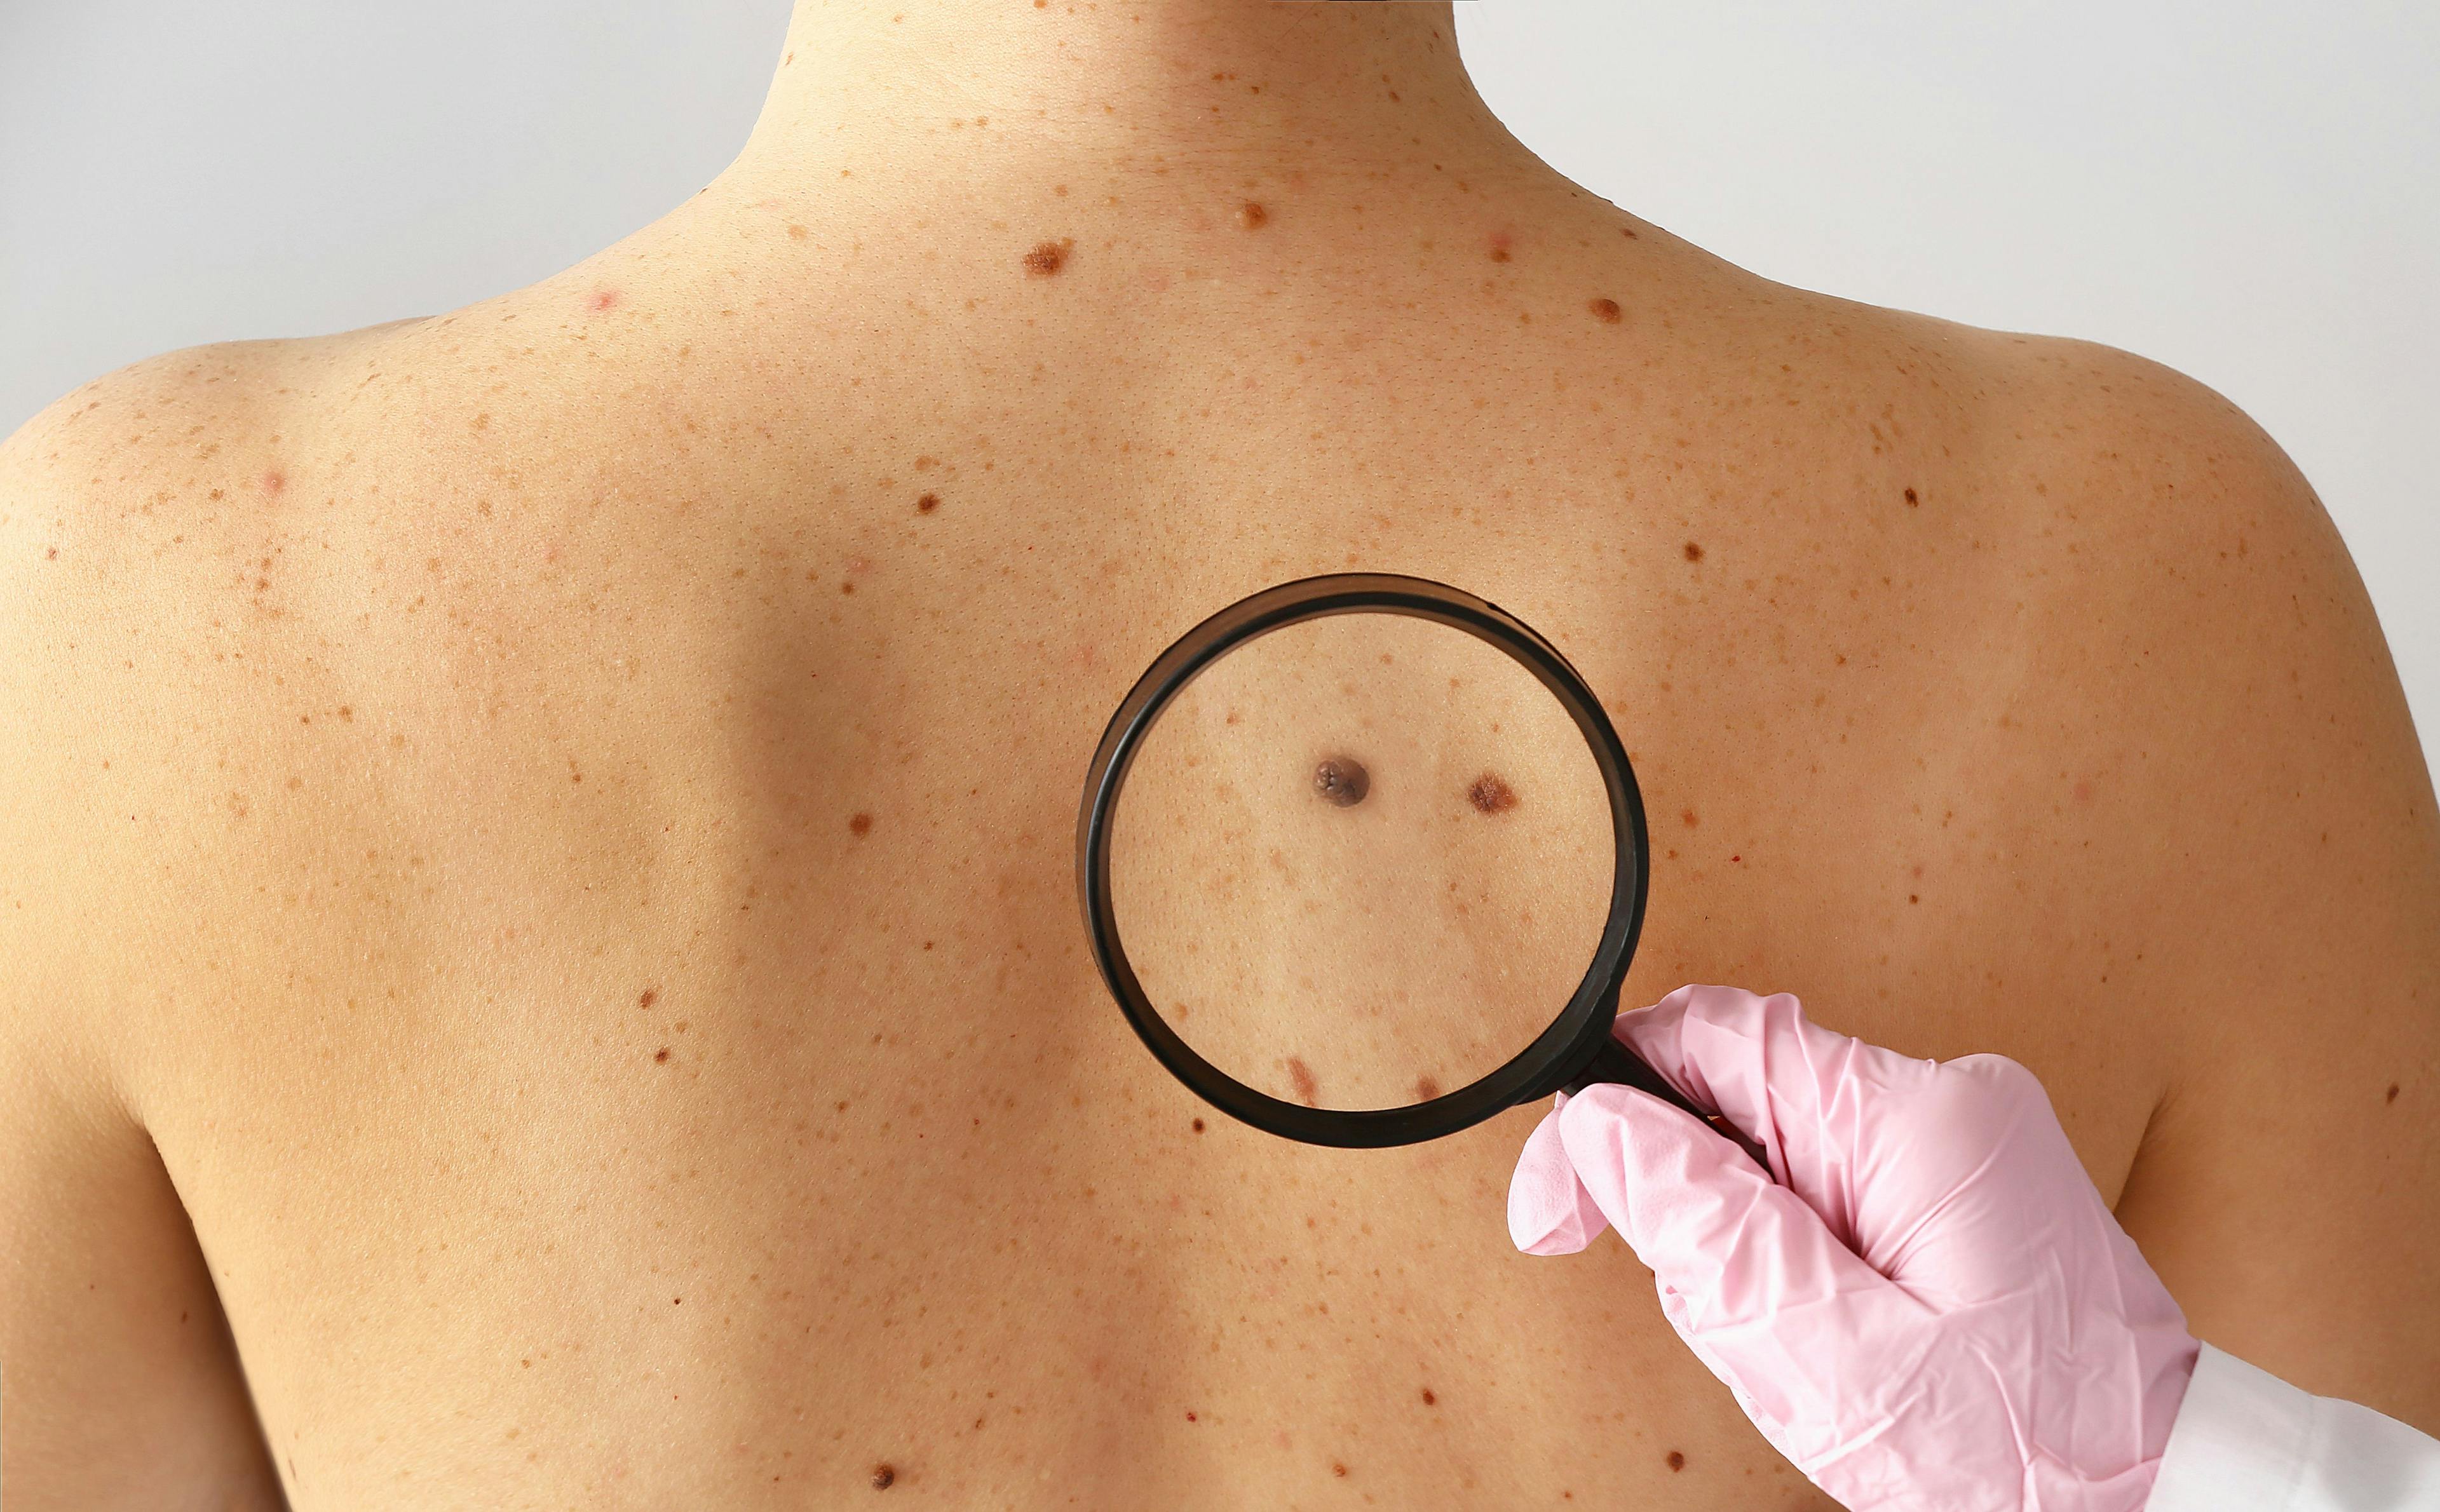 Dermatologist examining moles and potential melanoma | Image credit: Pixel-shot - stock.adobe.com